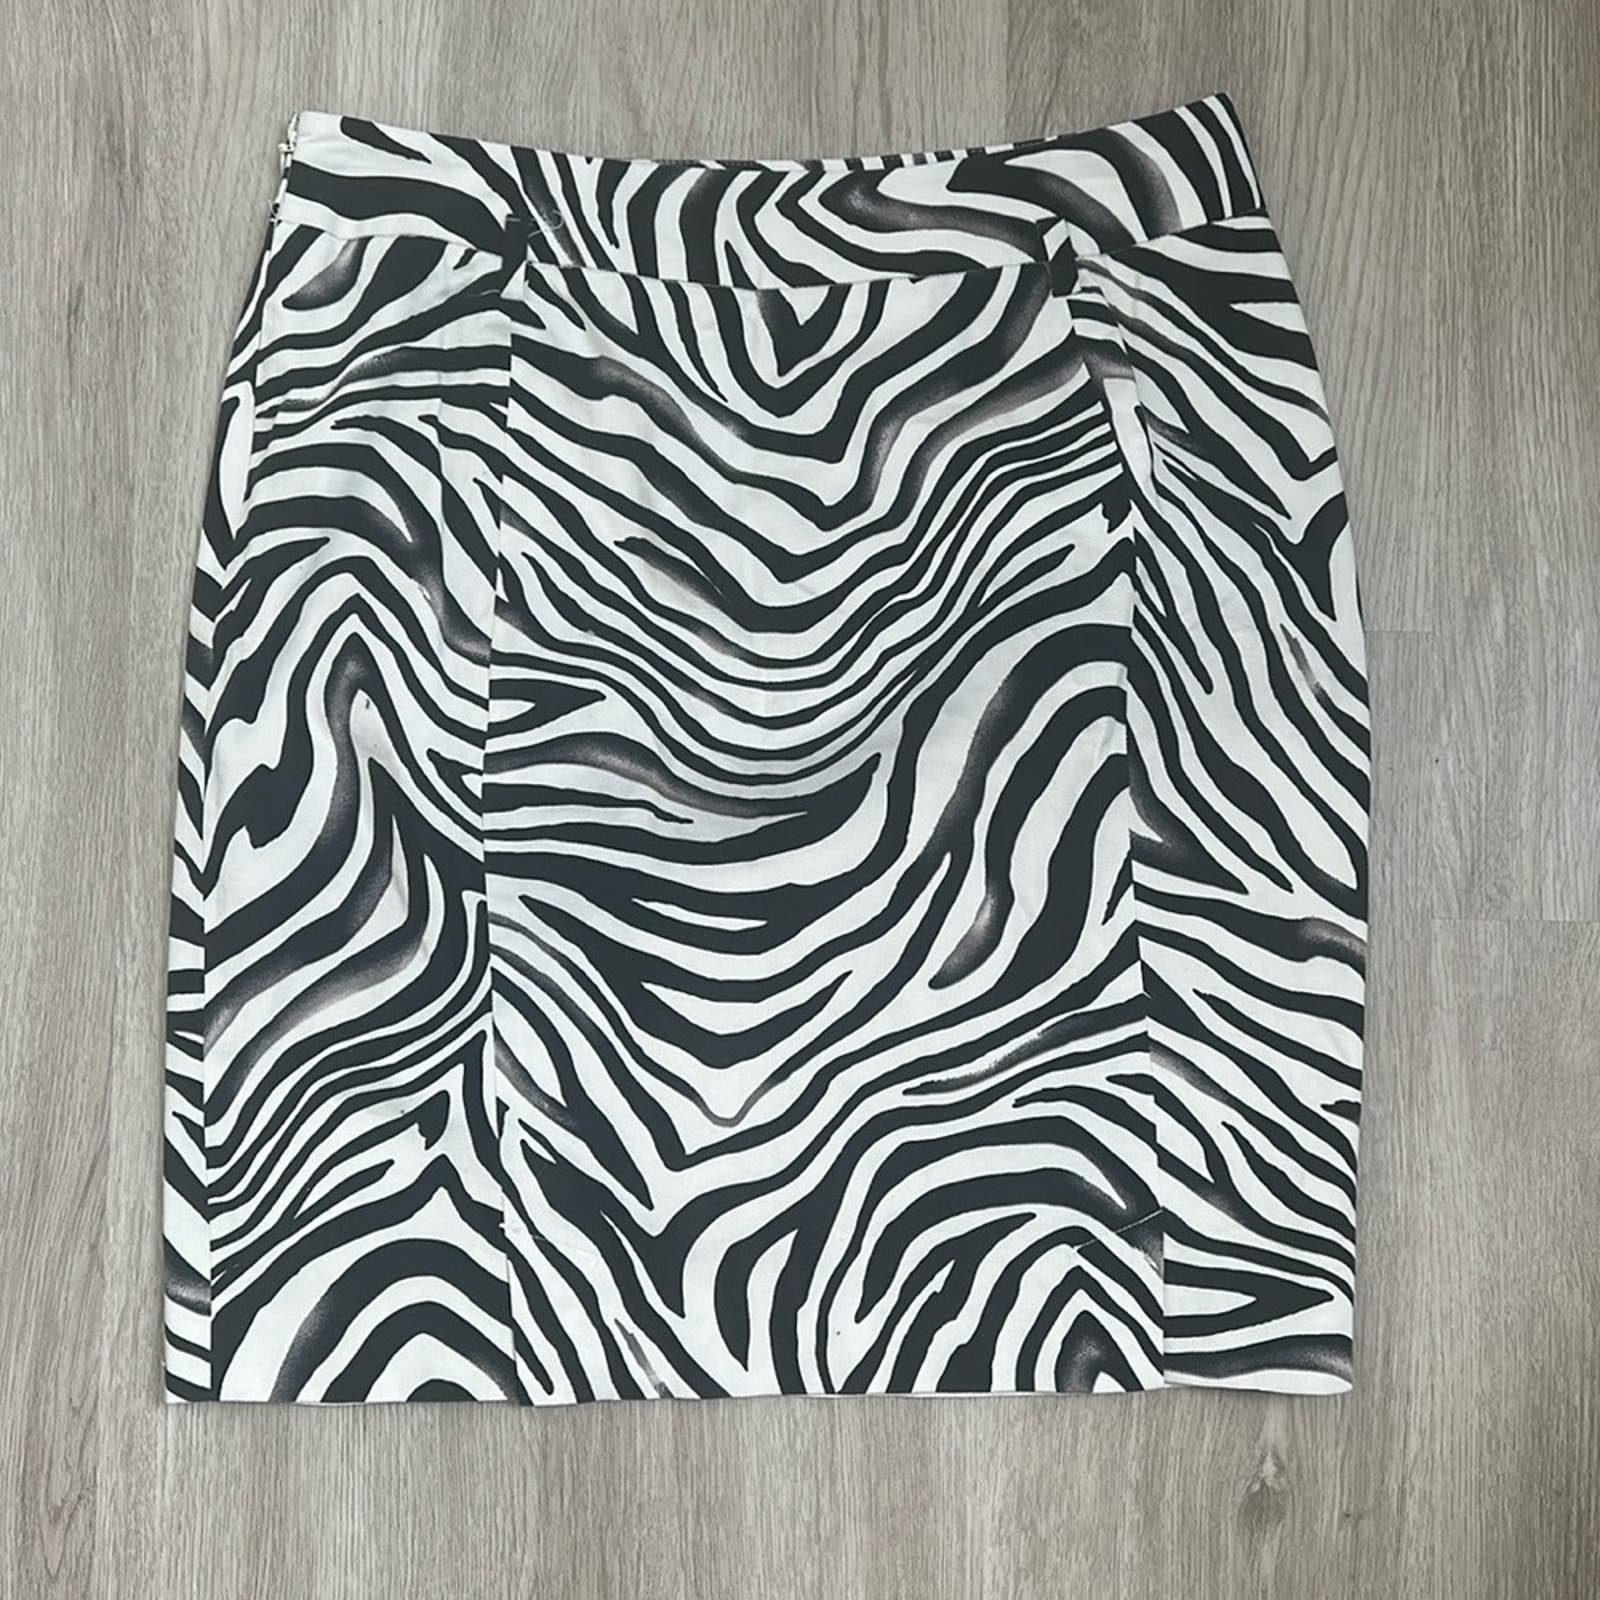 where to buy  Josephine chaus petite size 10p zebra print skirt JJVg2CTUh Online Exclusive